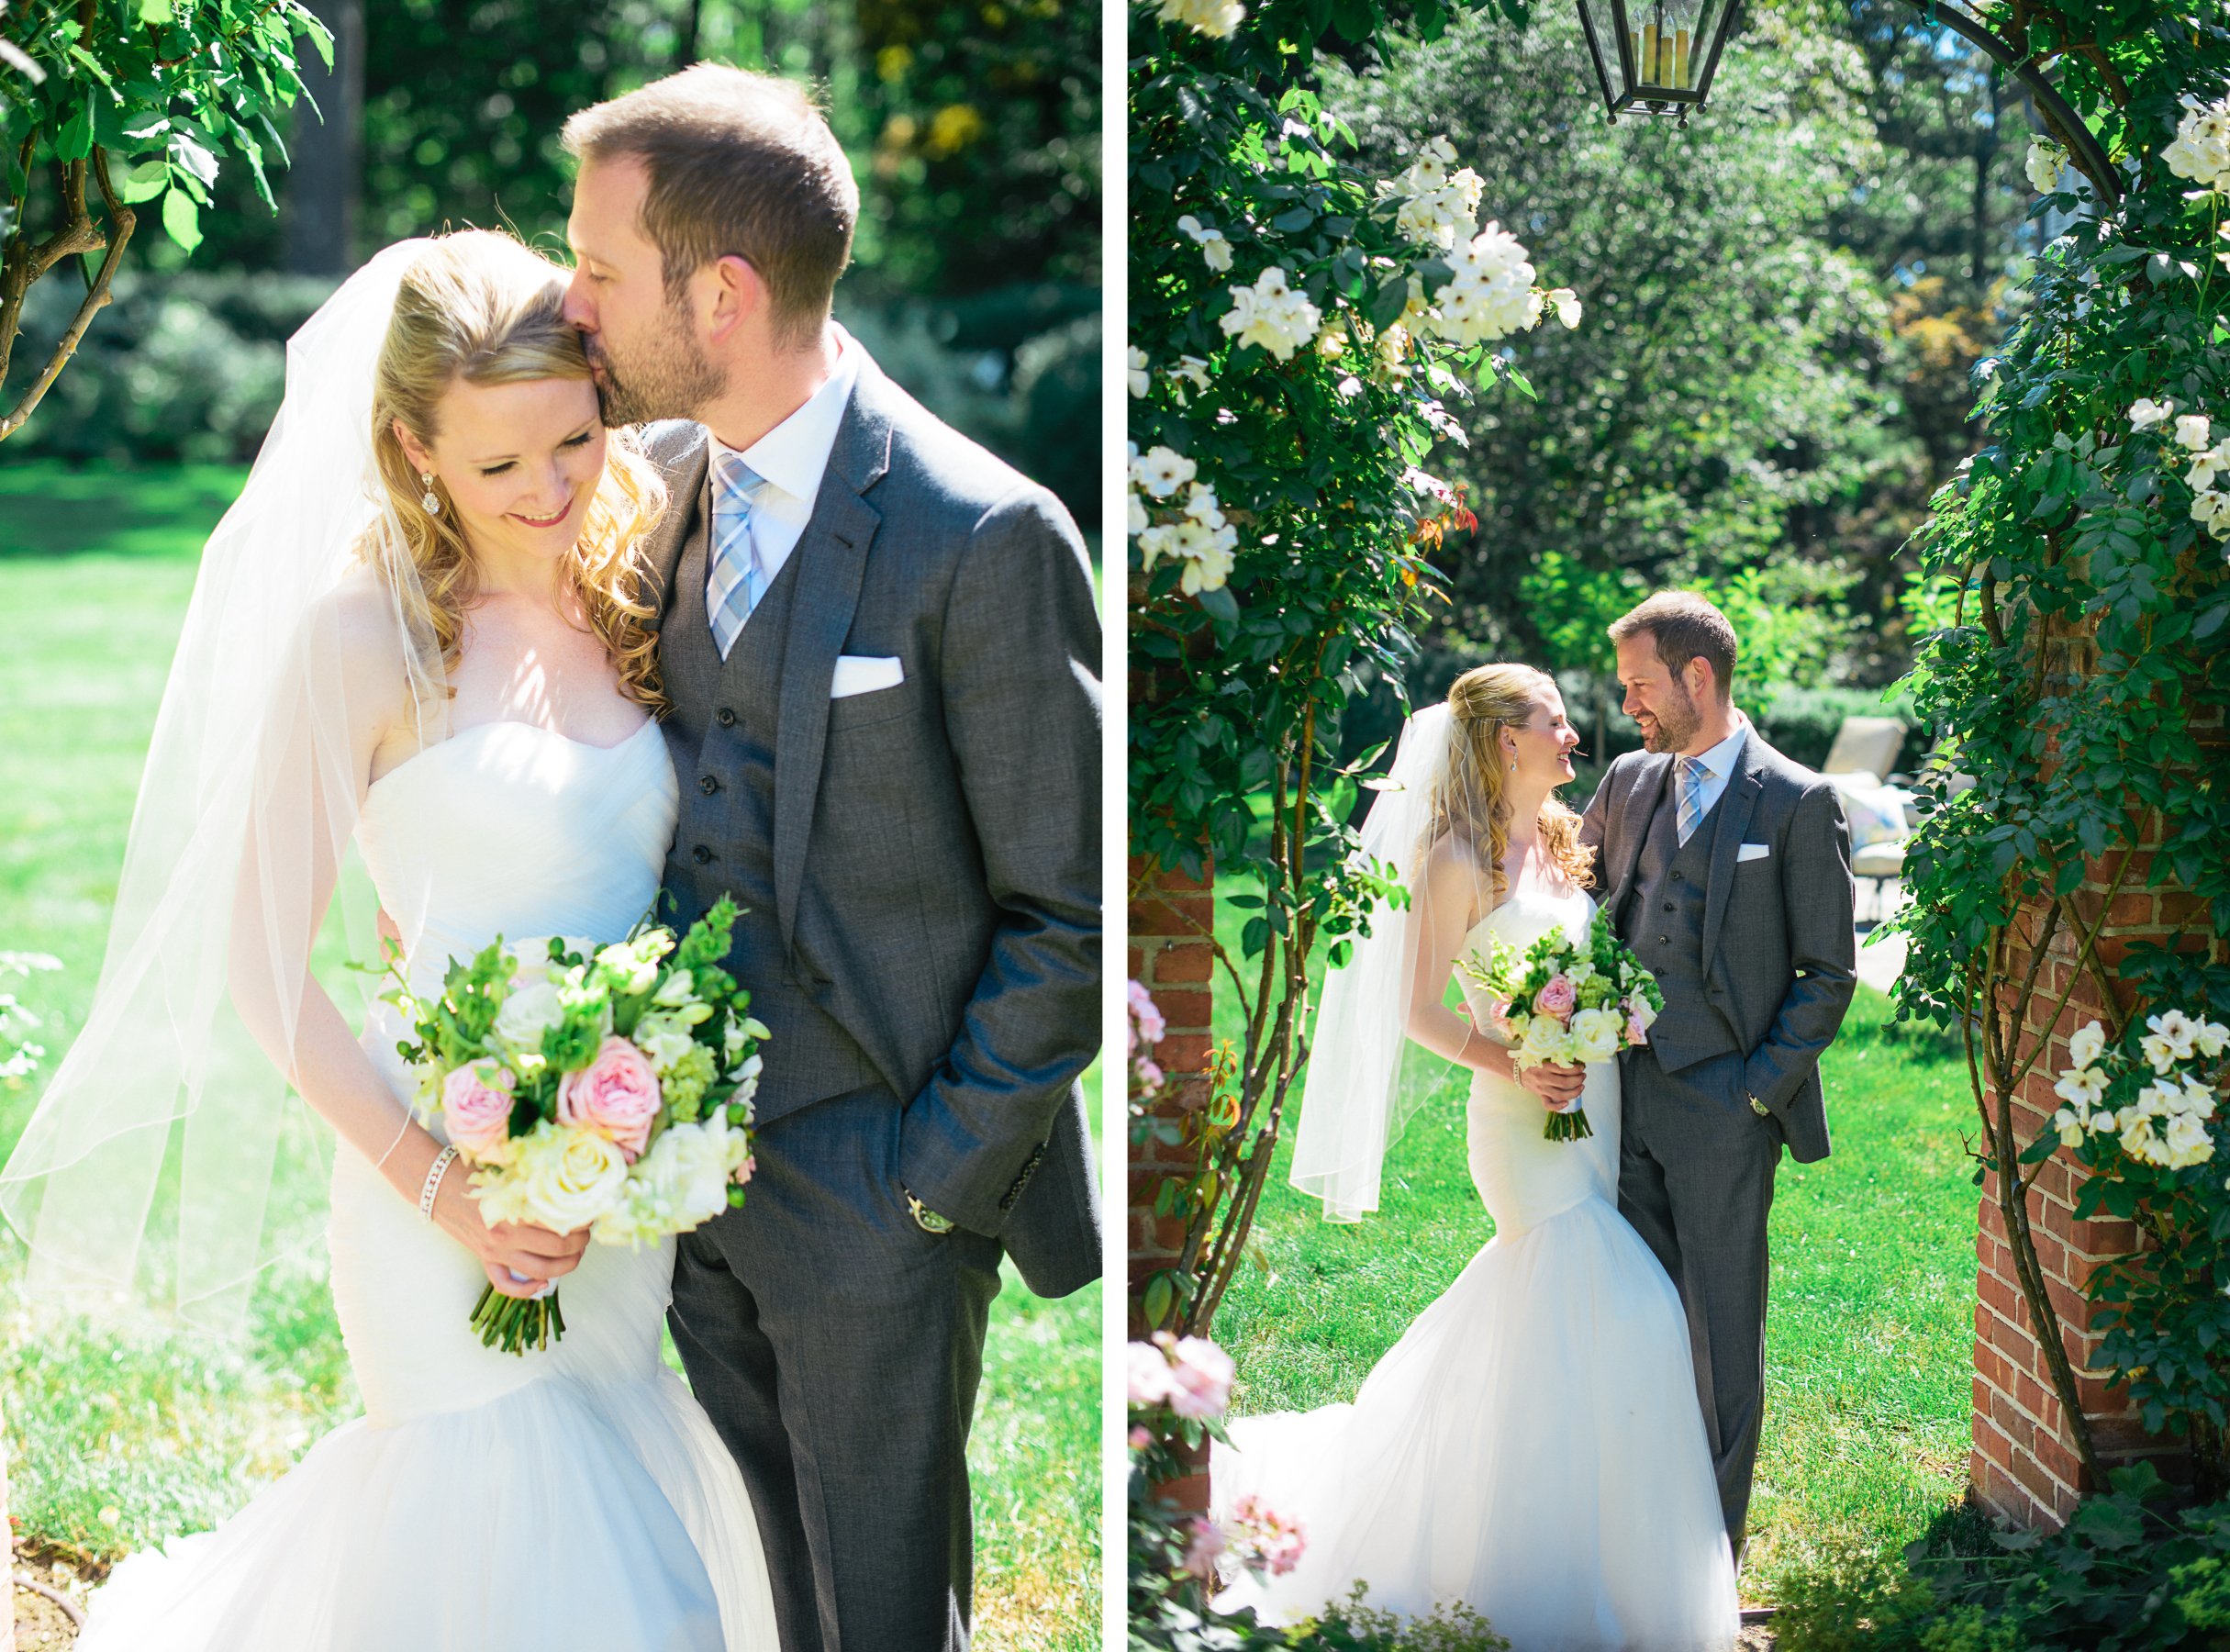 Maggie + Tom - Bernardsville New Jersey Backyard Wedding - Alison Dunn Photography photo